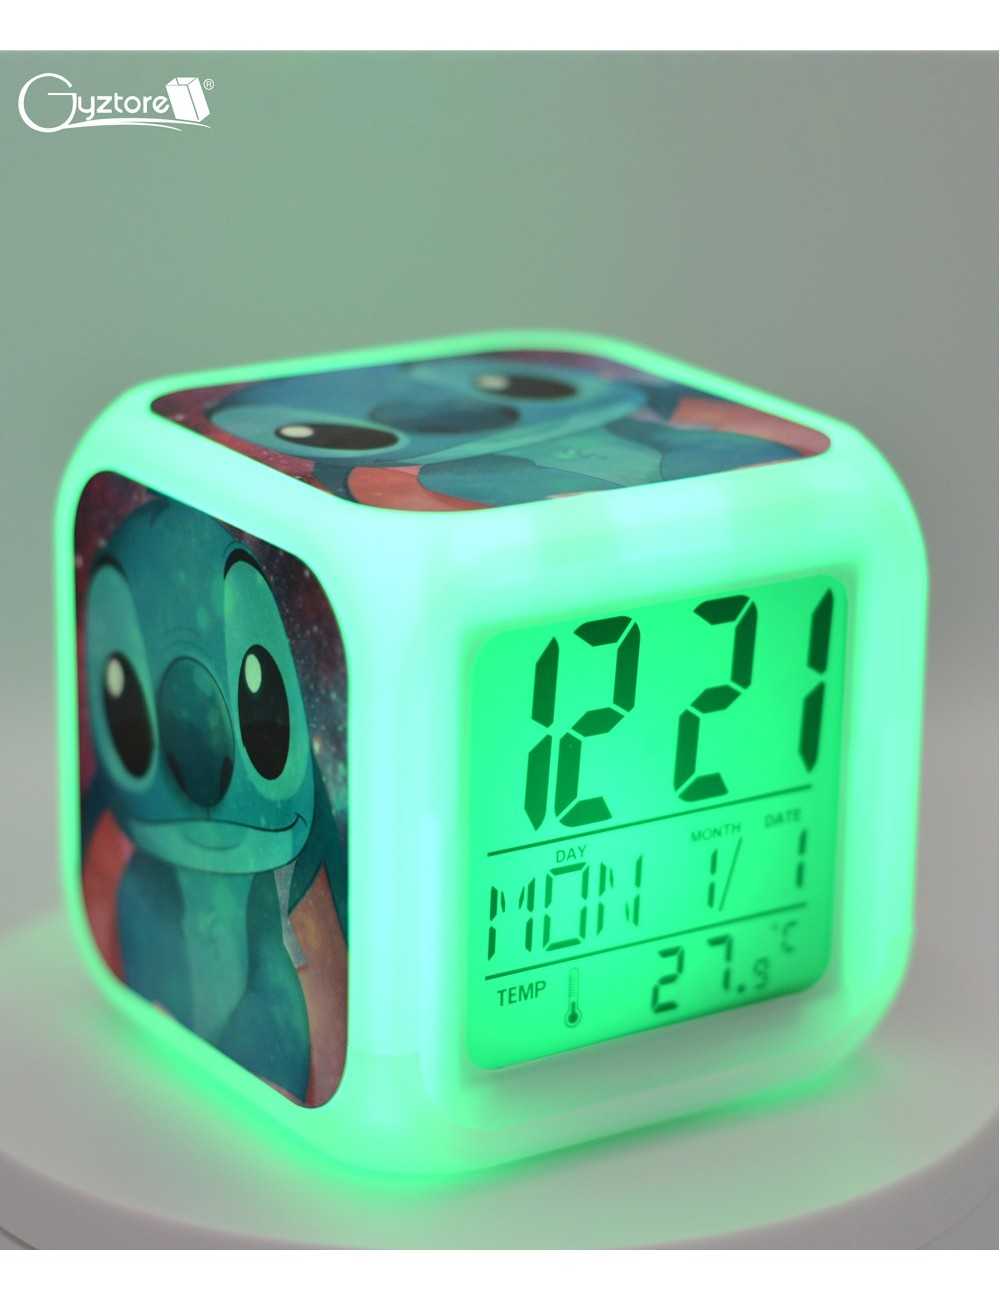 Relojes digitales “Stitch” con LED multicolor